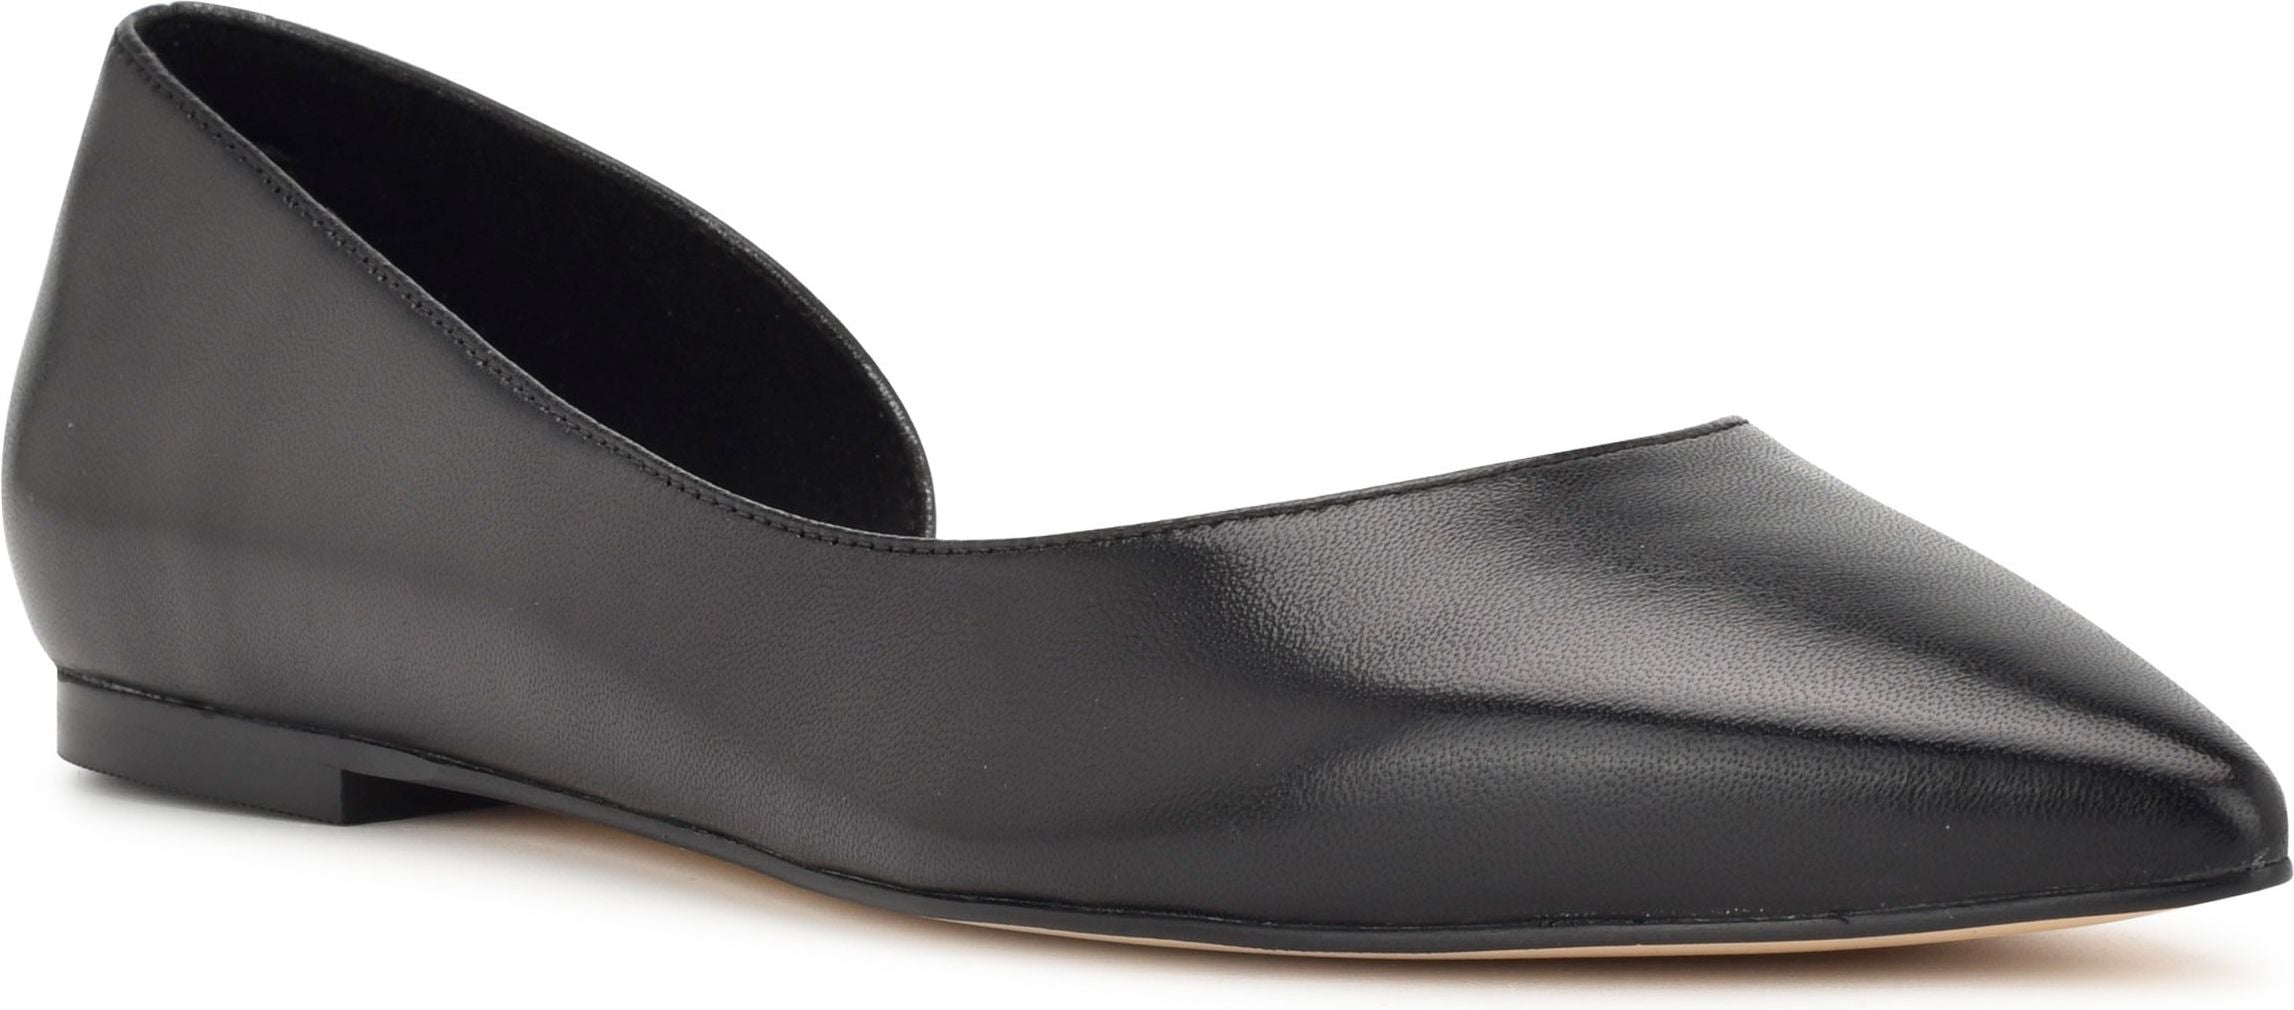 Blaha Black Flat Shoe